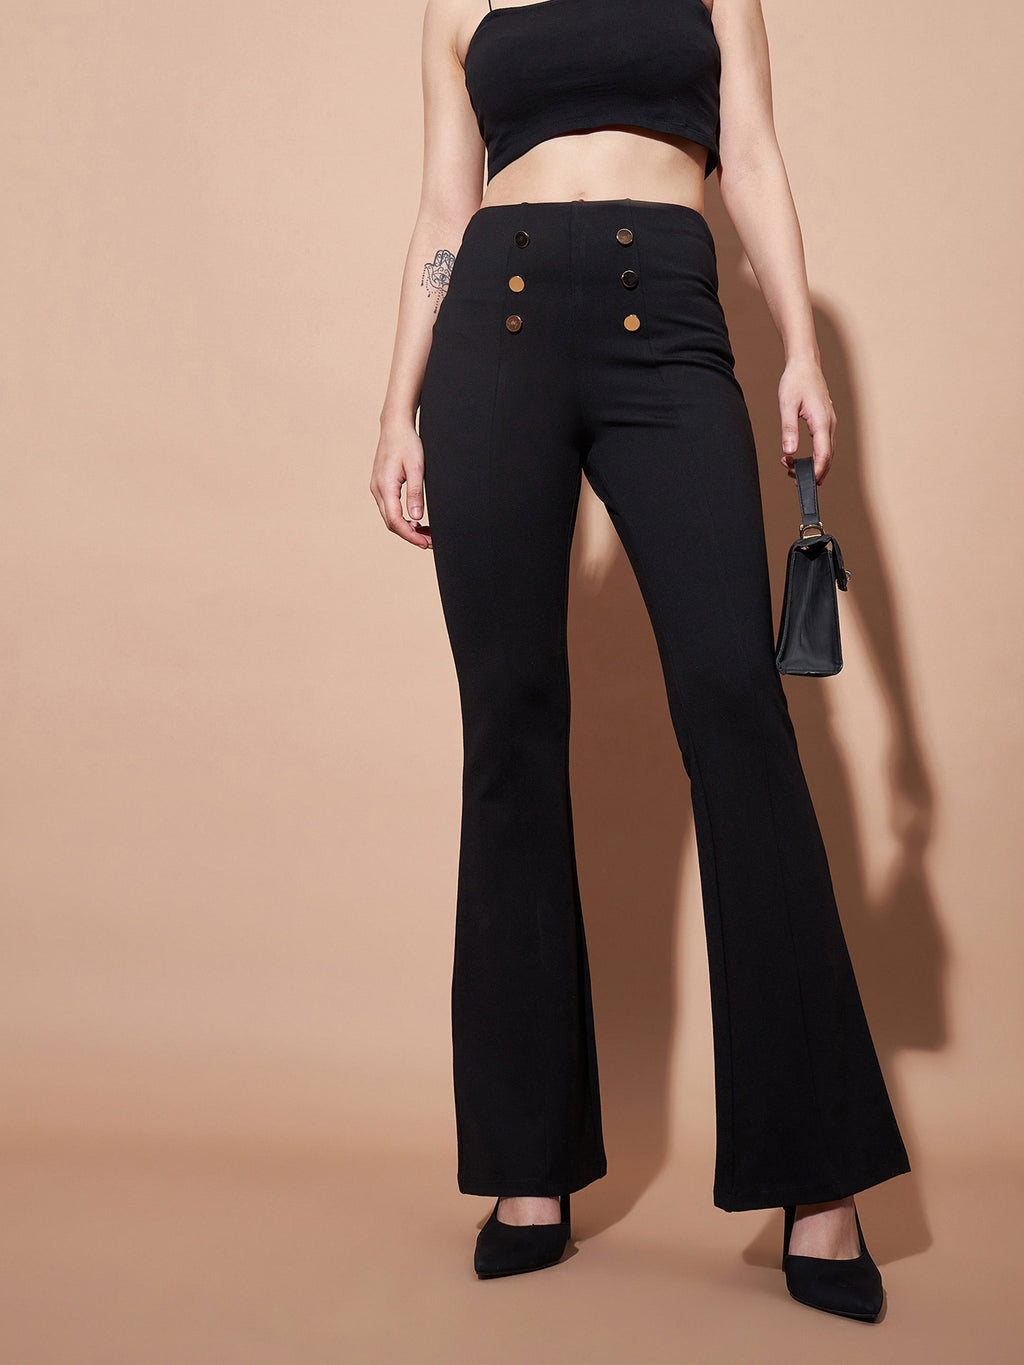 Black Highlight Waisted Suspender Pant: Women's Luxury Pants